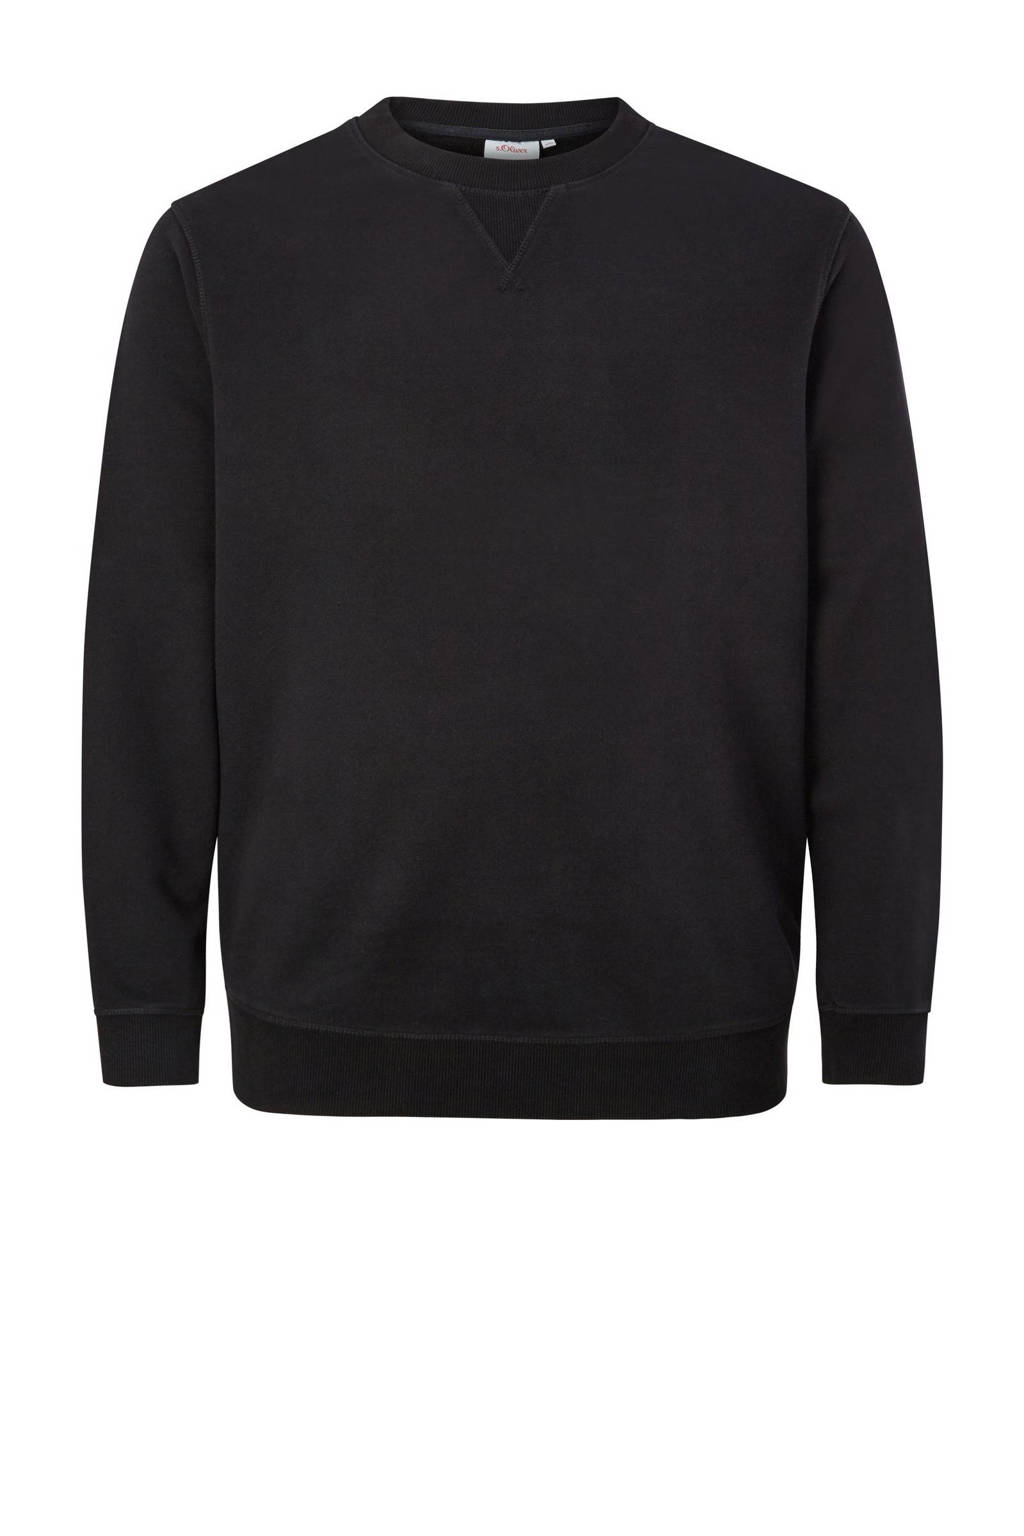 s.Oliver Big Size sweater Plus Size zwart, Zwart